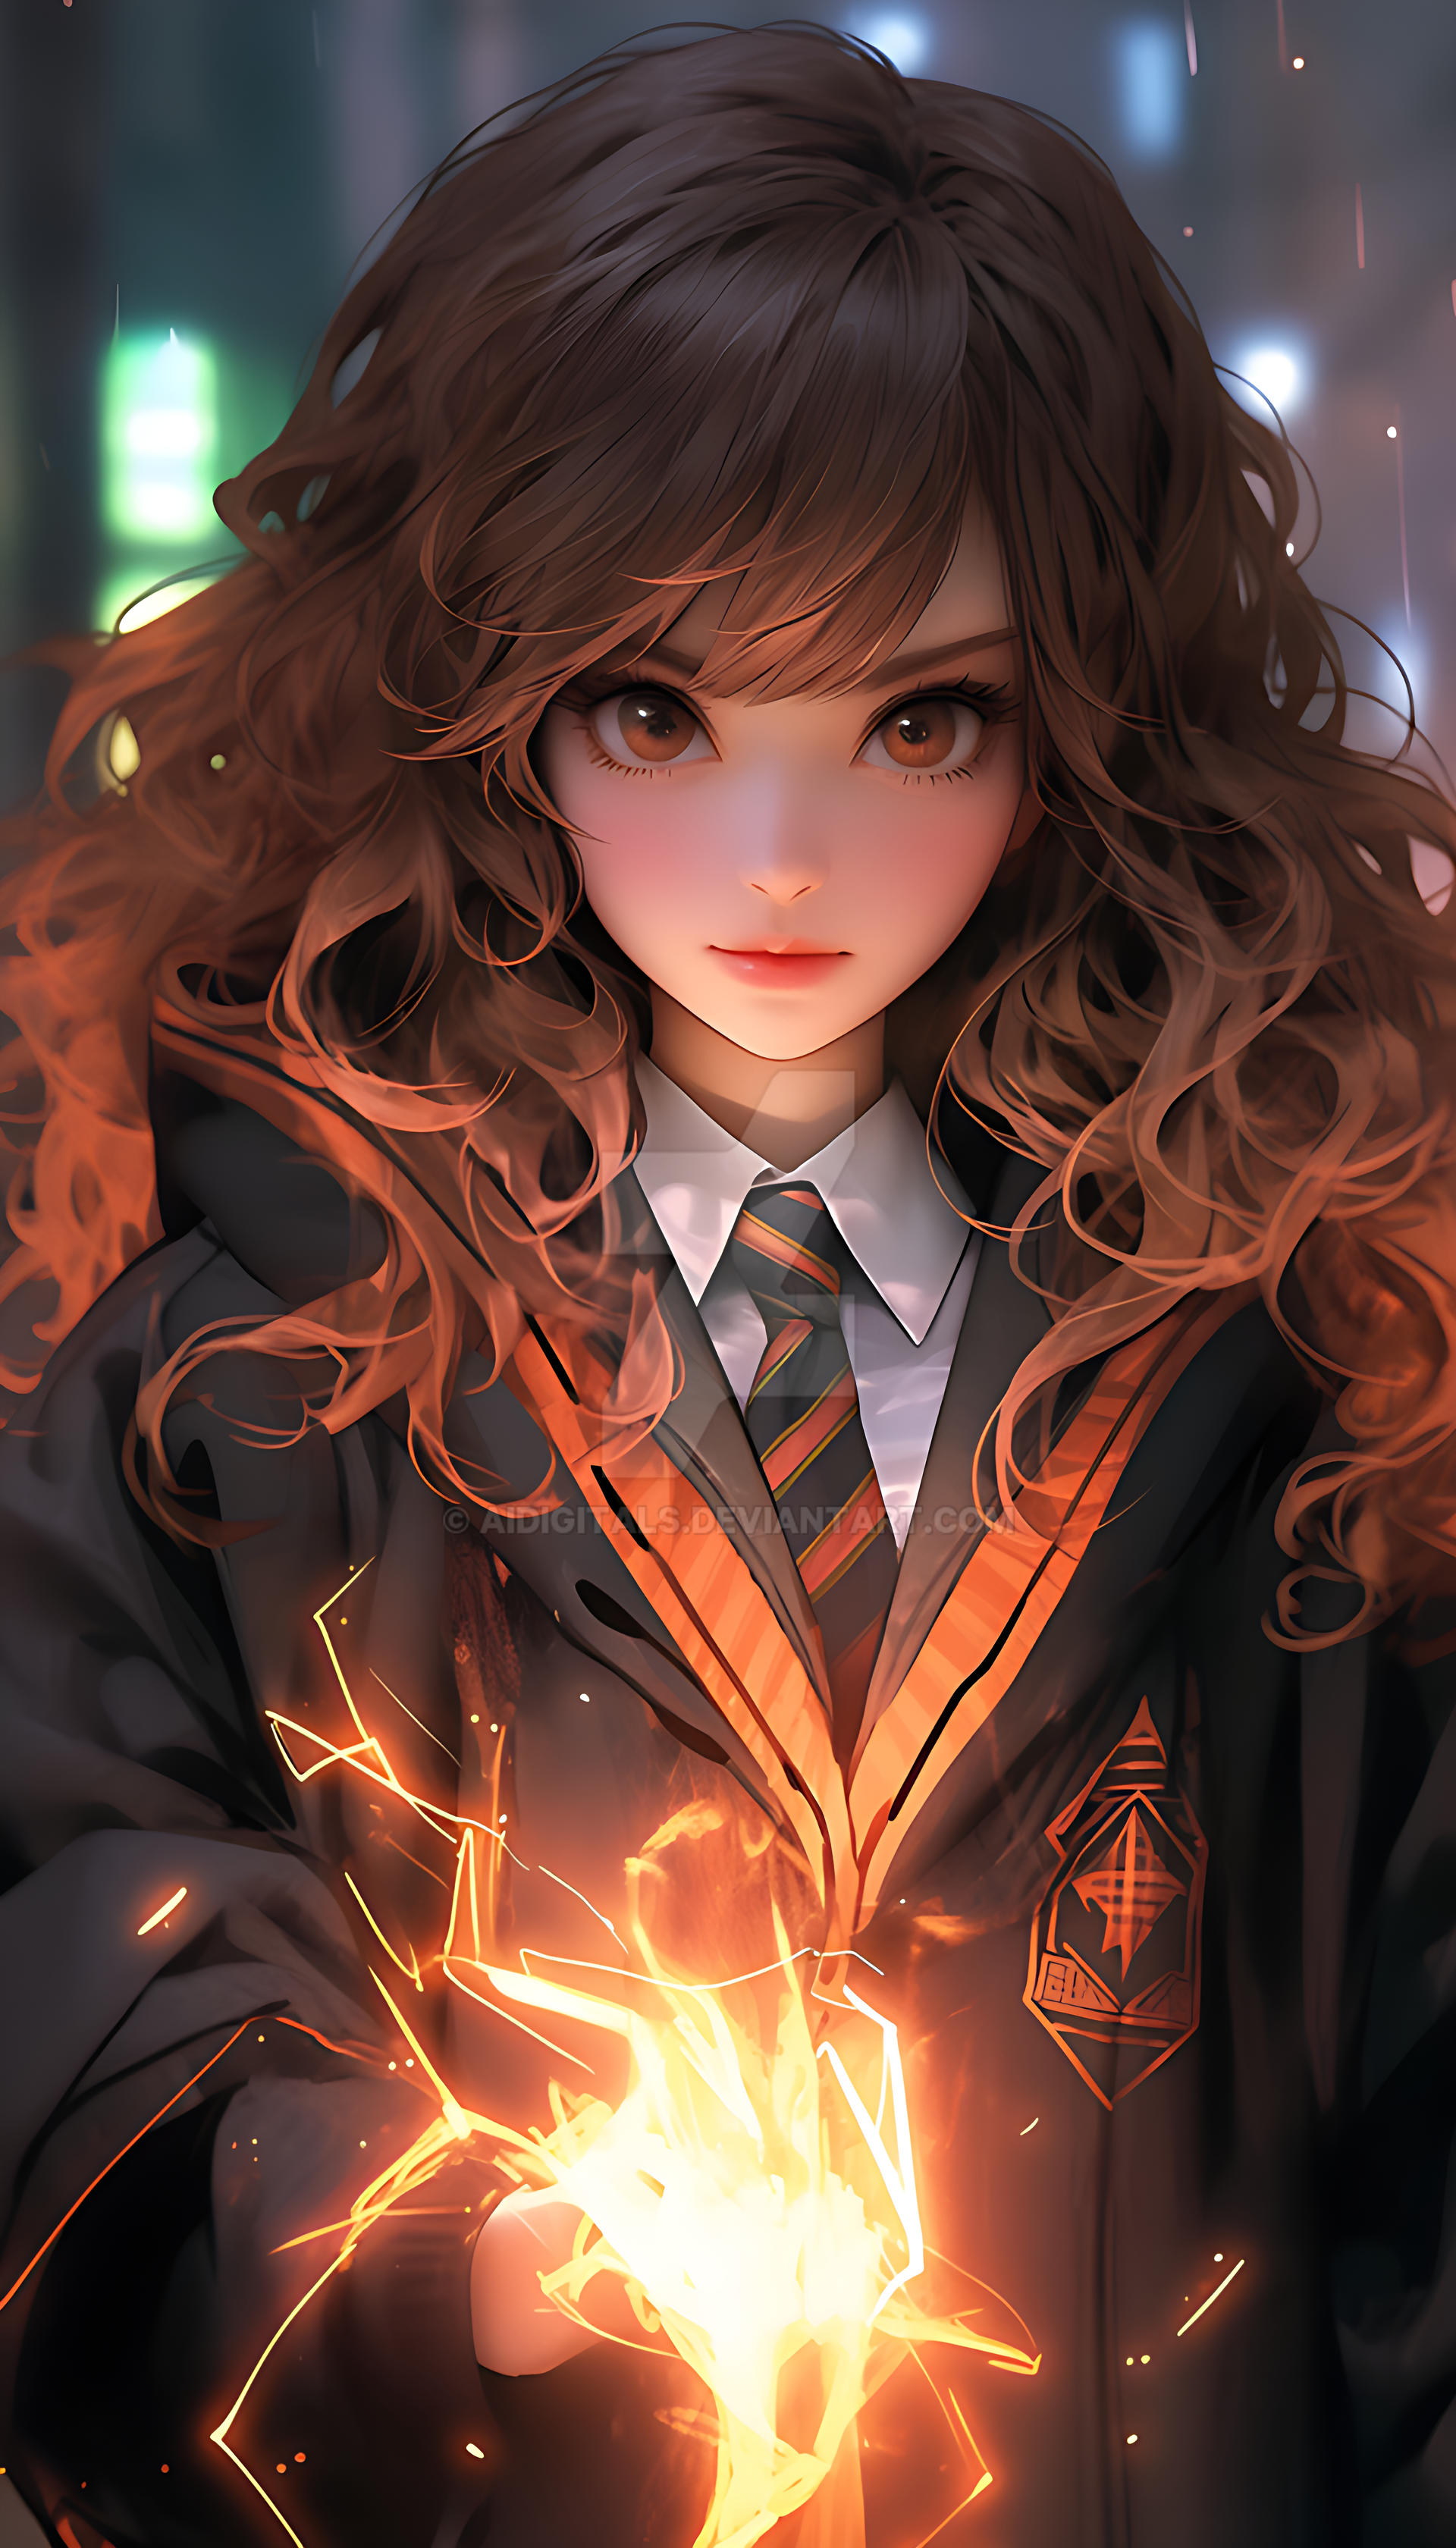 Hermione Harry Potter by AiDigitals on DeviantArt